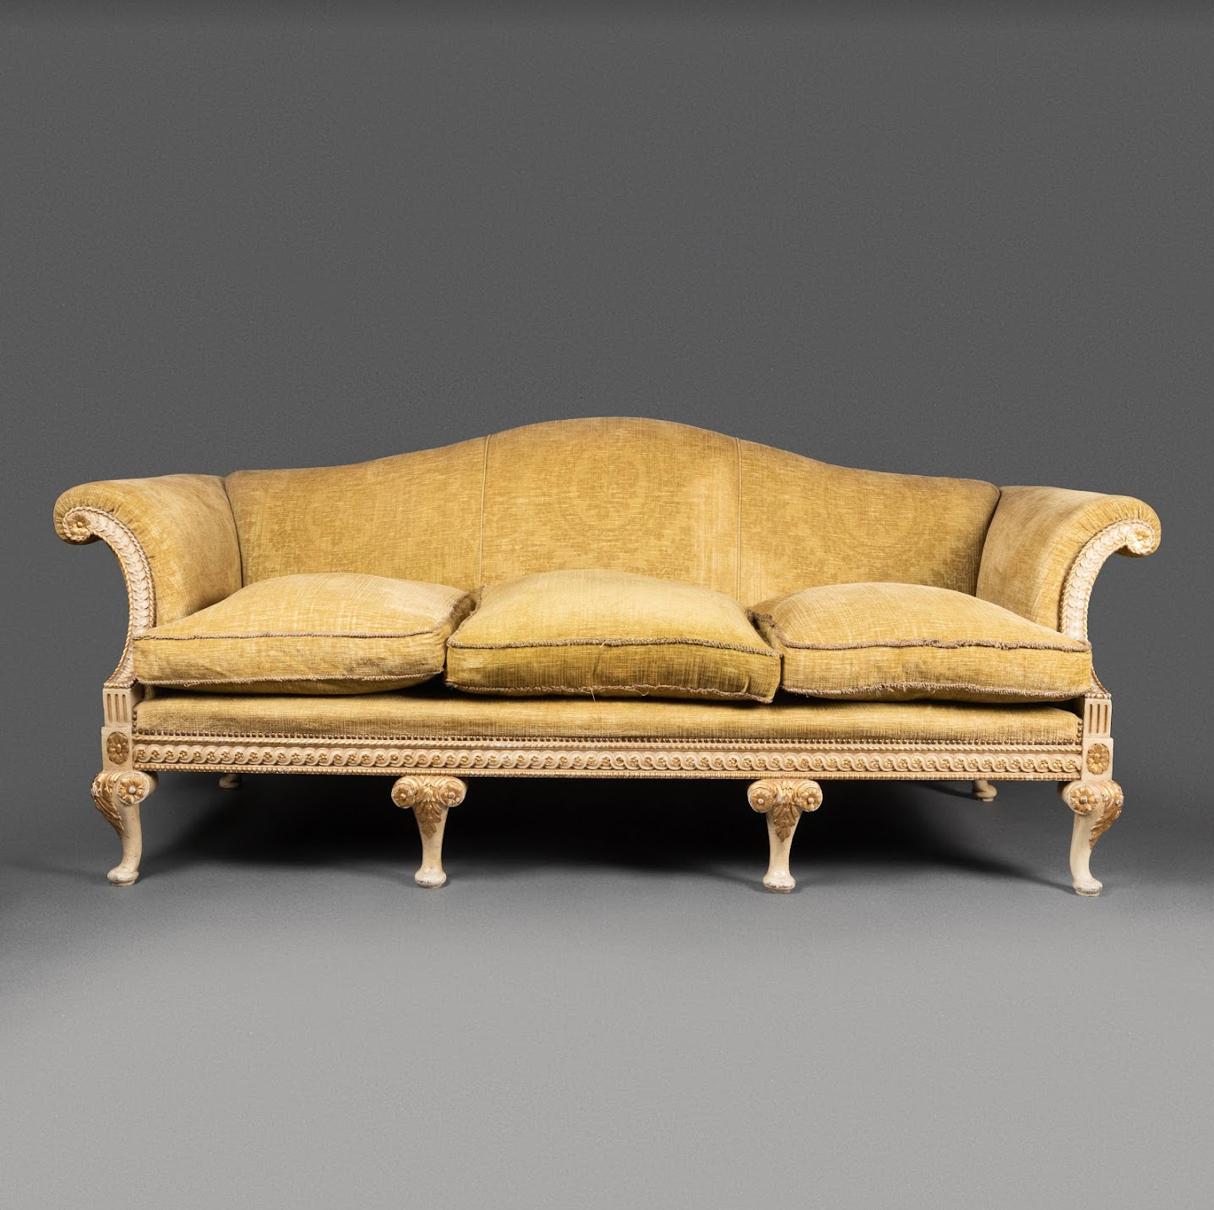 English sofa. Late 19th century.